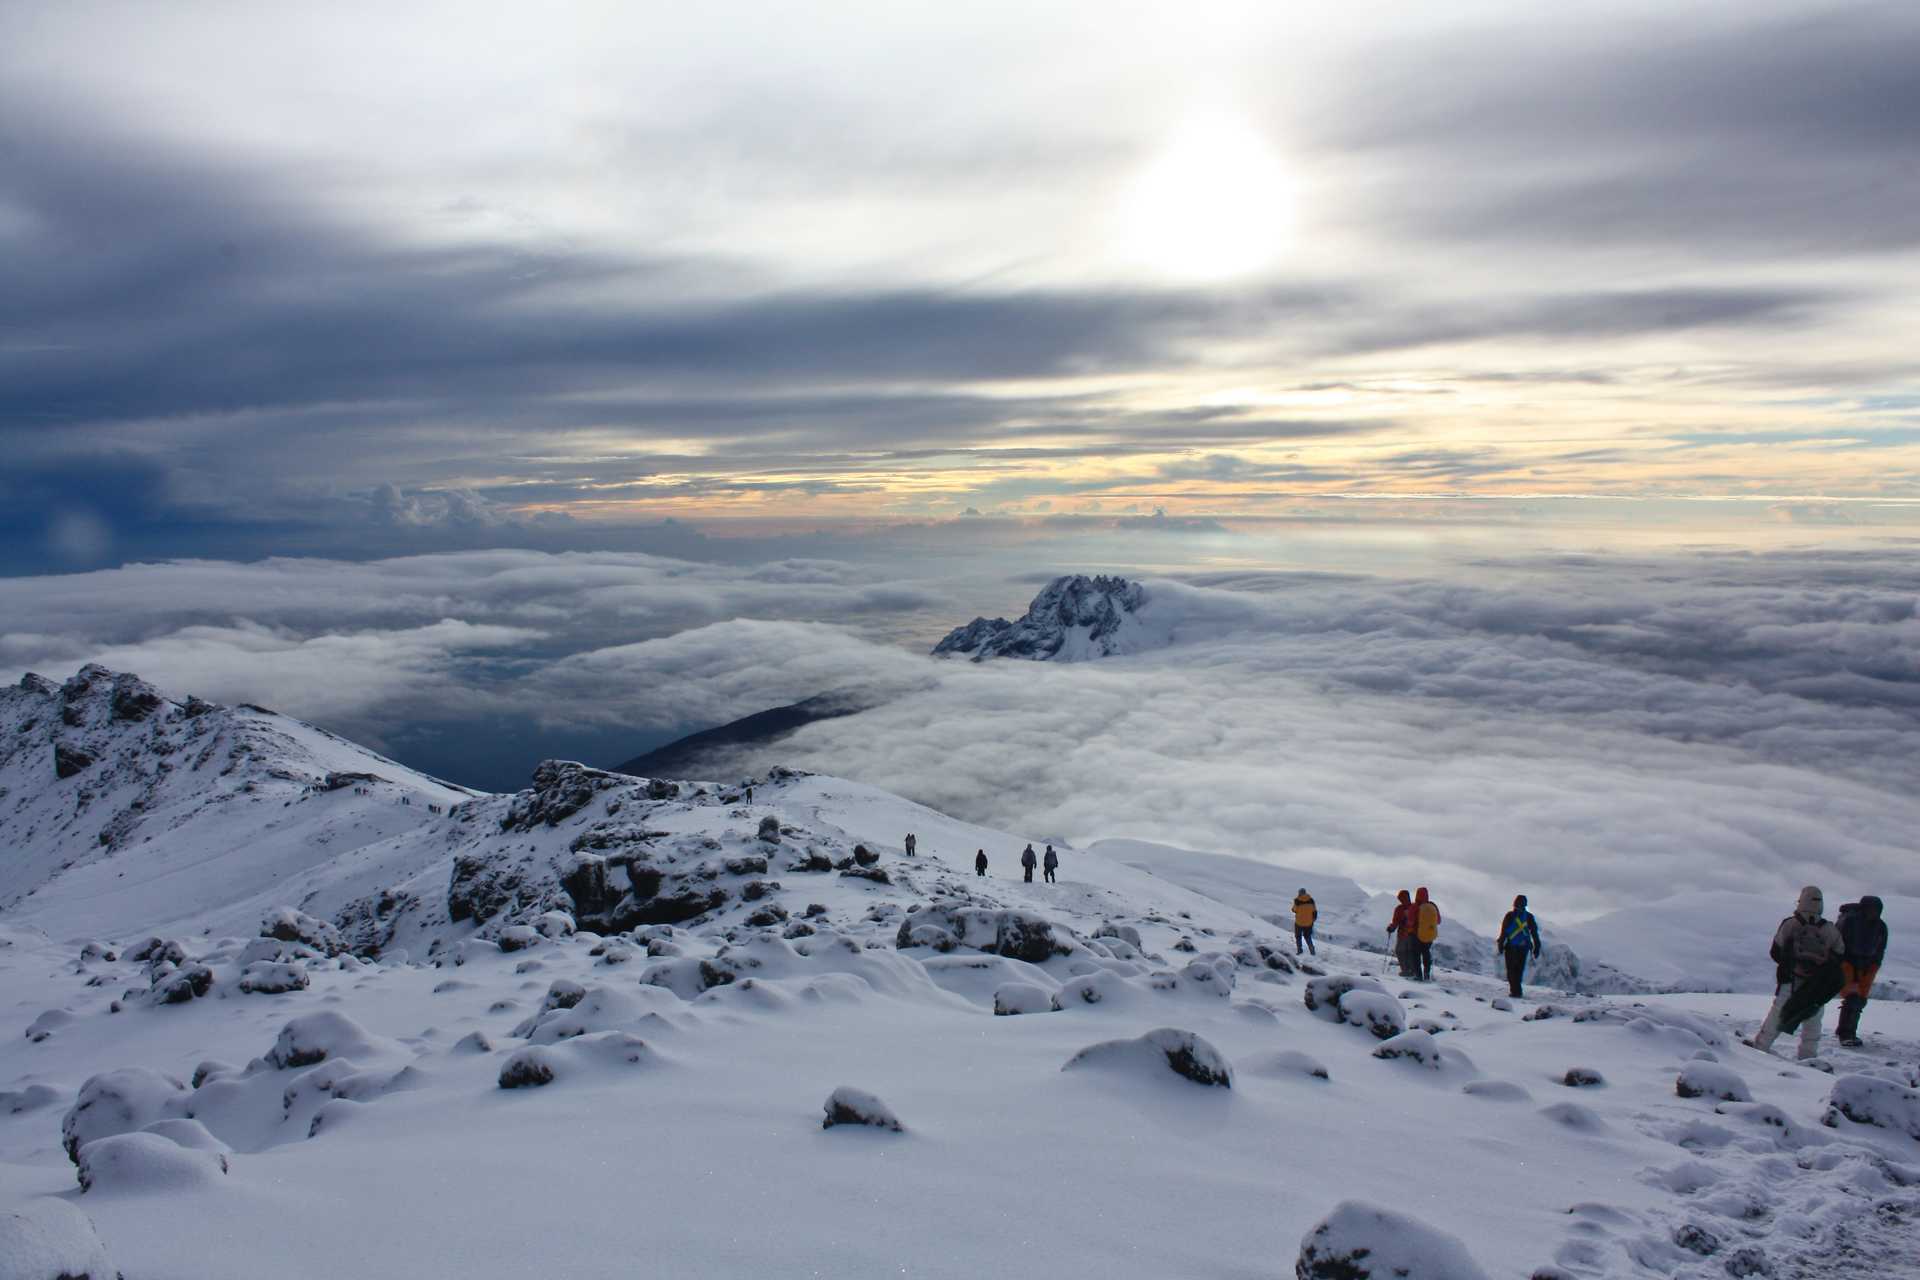 Sunrise above the clouds at Kilimanjaro summit